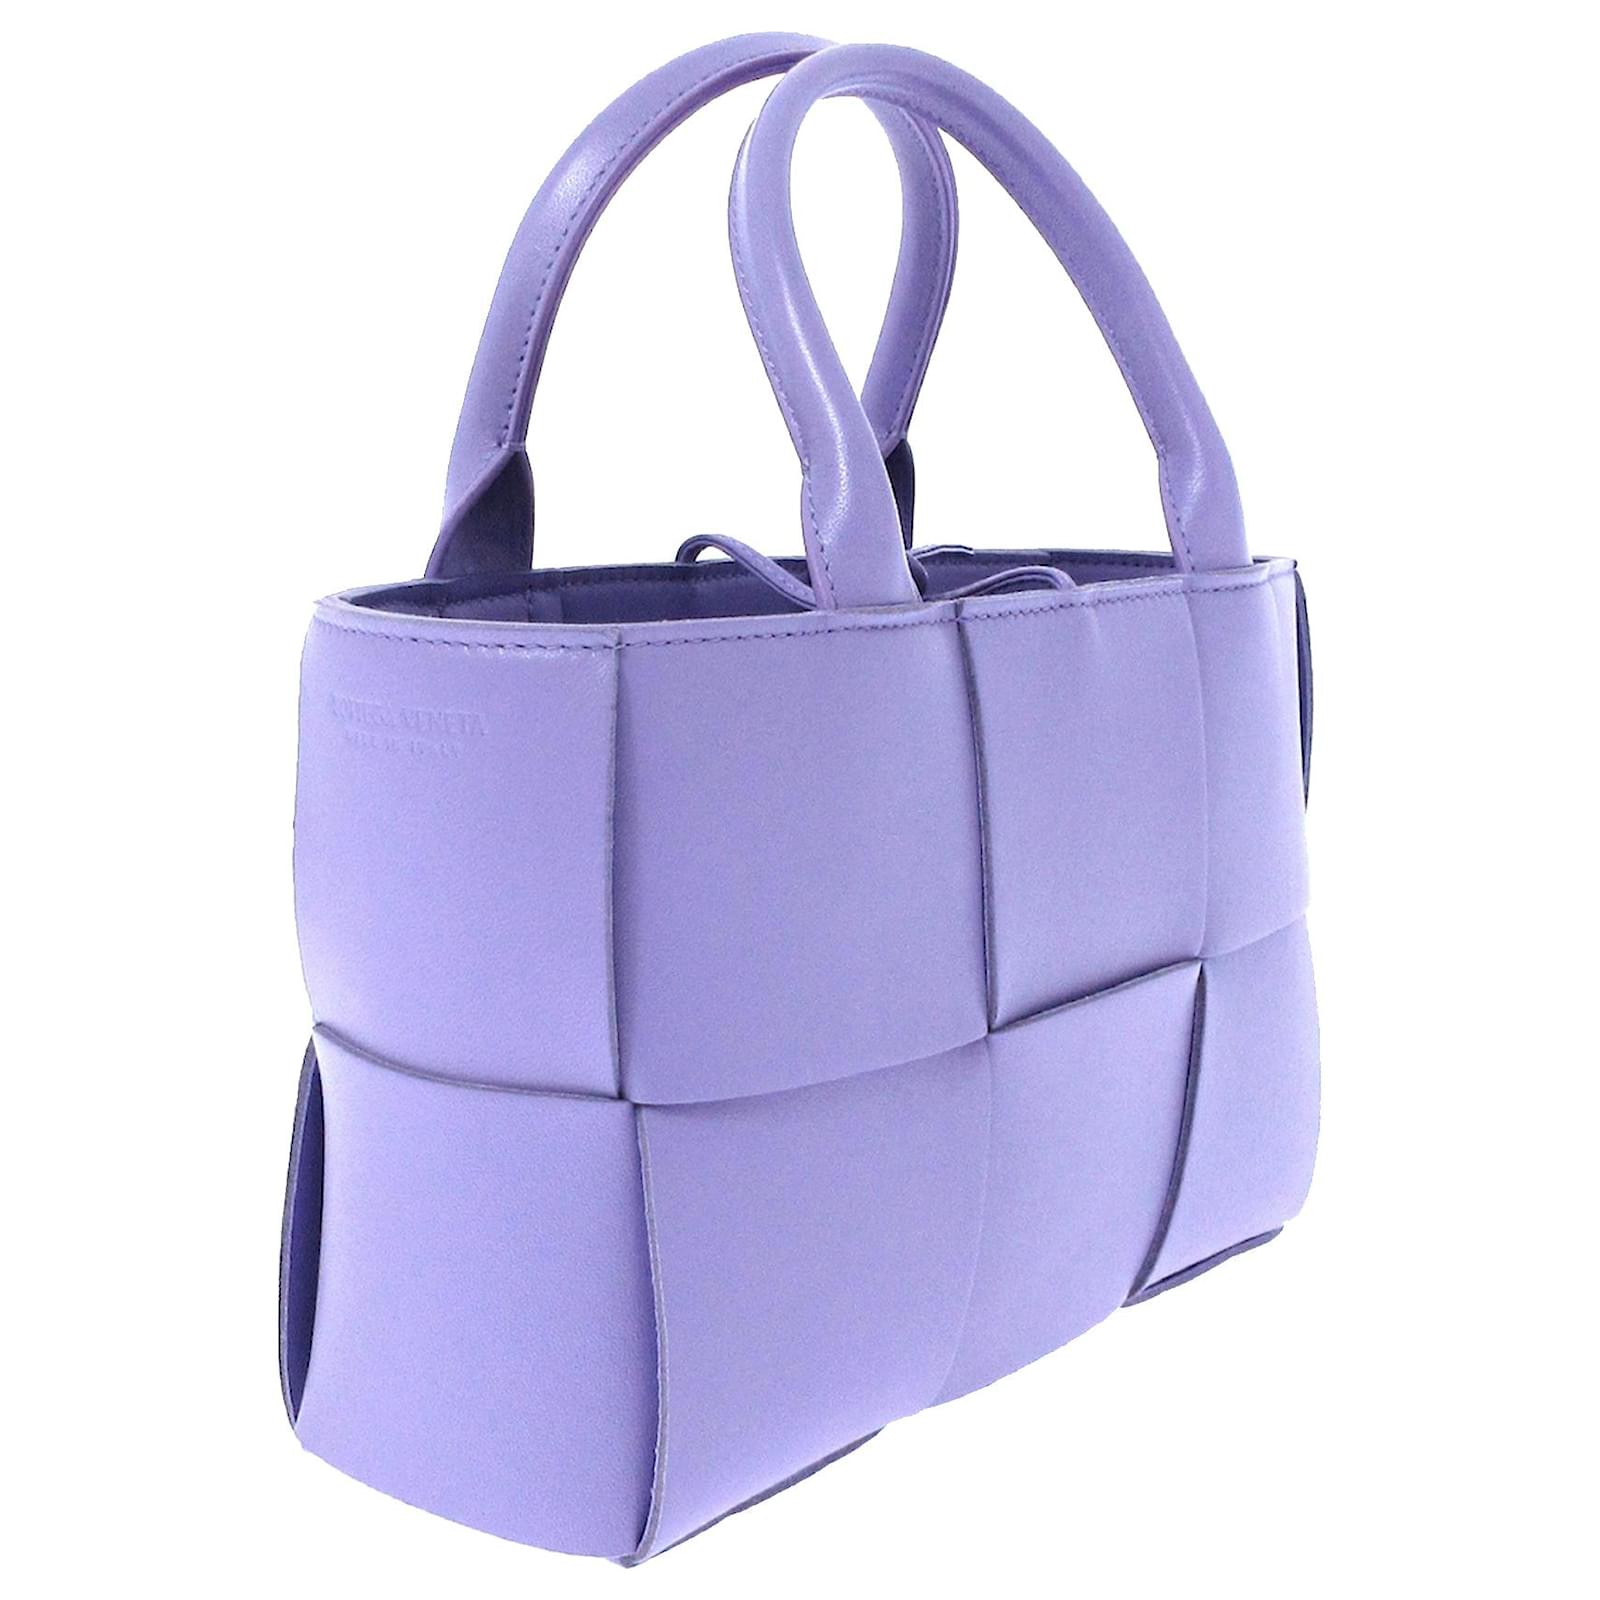 Bottega Veneta - Women's Mini Arco Tote Bag - Purple - Leather